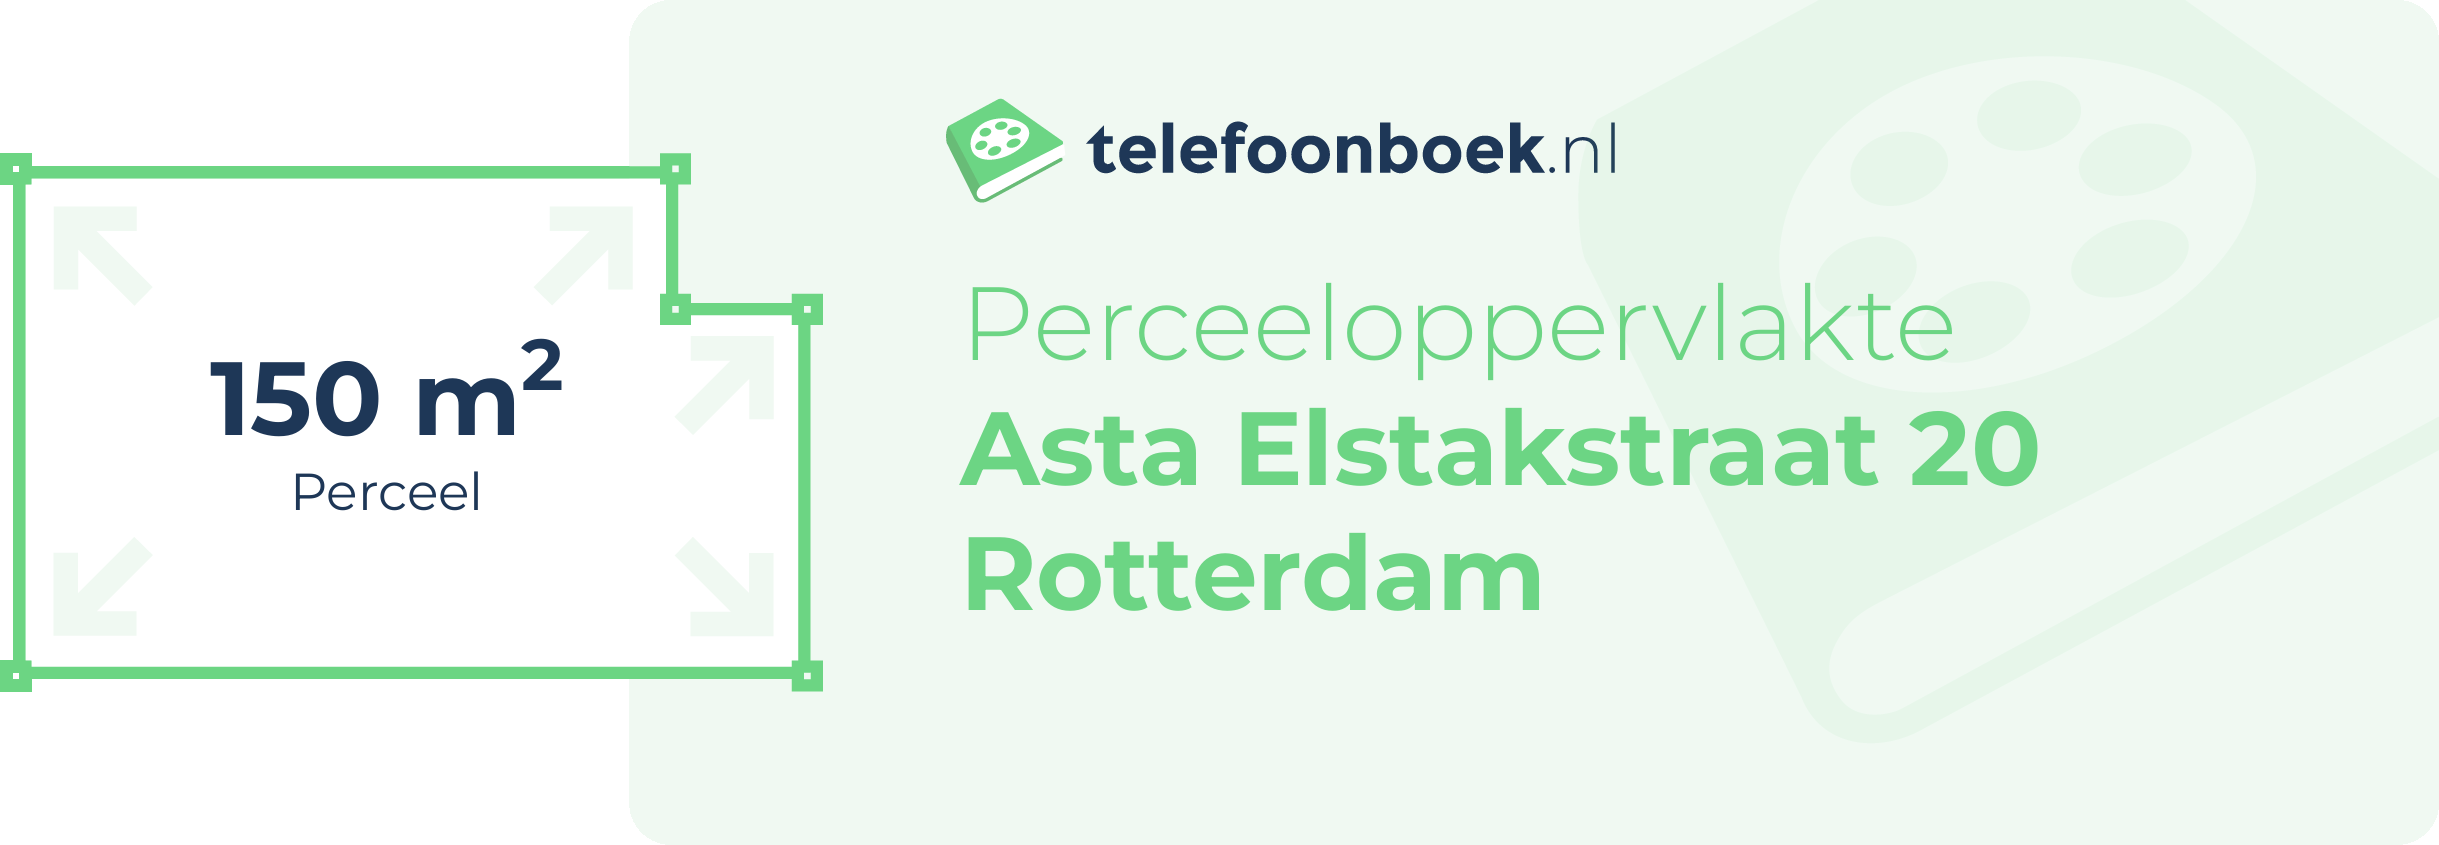 Perceeloppervlakte Asta Elstakstraat 20 Rotterdam